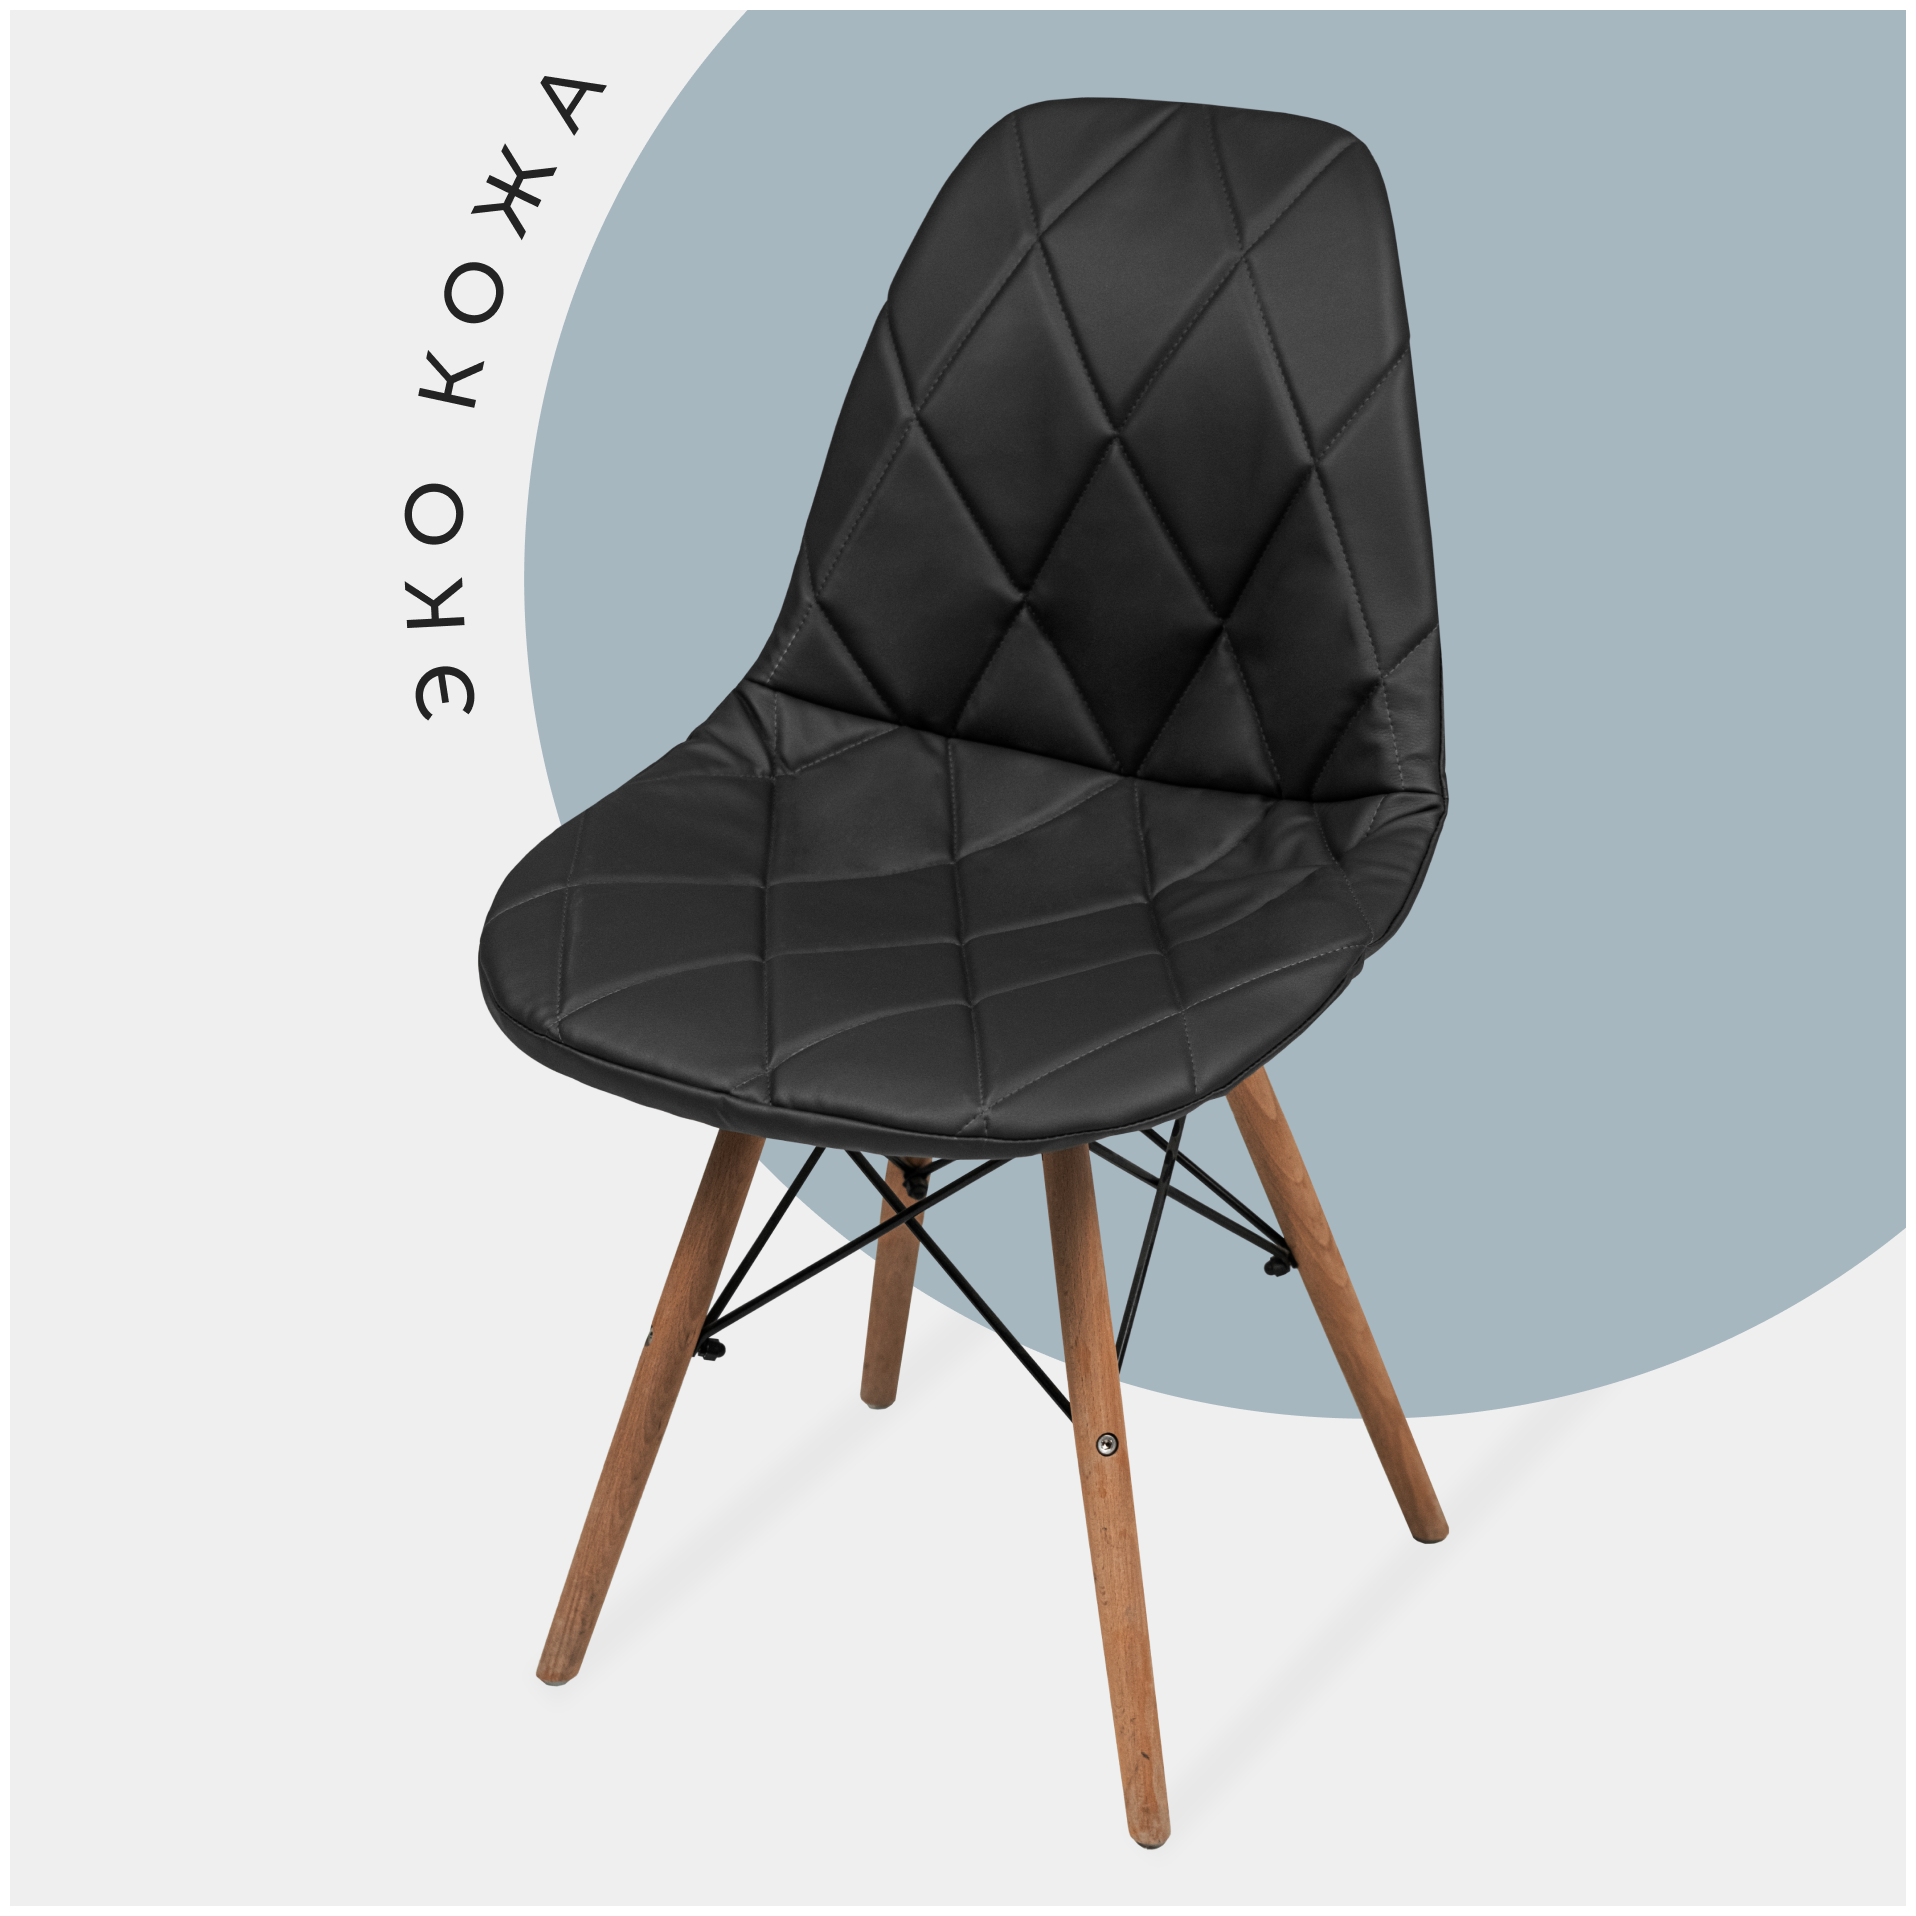 Чехол на стул со спинкой Eames DSW из экокожи, 40x46 см, темно-серый, крупный ромб